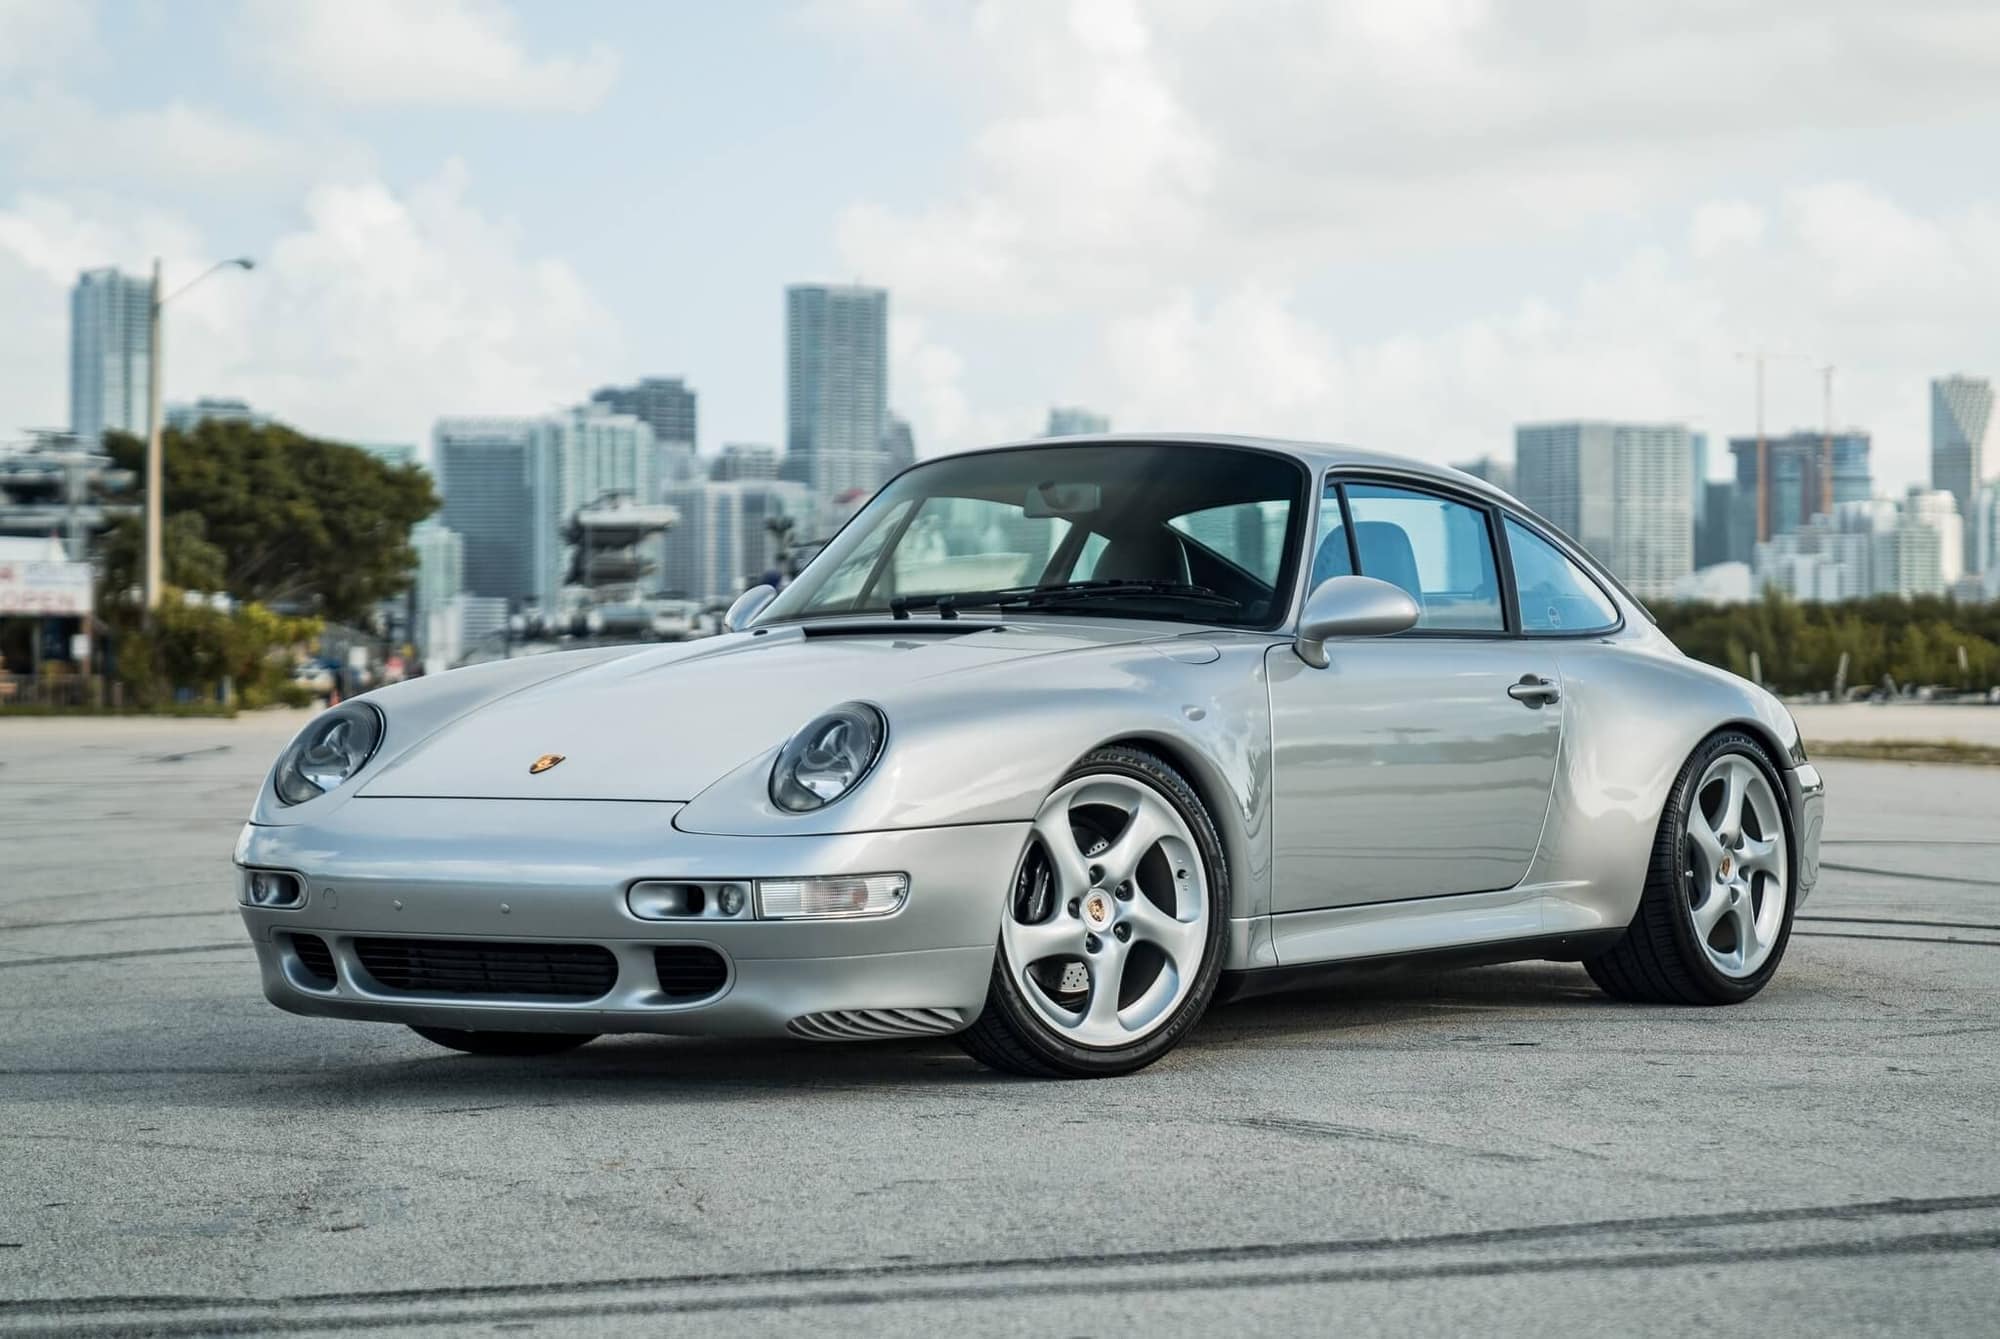 1997 Porsche 911 - 1997 Porsche 911 (993) Carrera S - C2S MT: a Frienship and a Story - Used - VIN WP0AA2997VS323018 - 198,504 Miles - 6 cyl - 2WD - Manual - Coupe - Silver - Miami Beach, FL 33139, United States